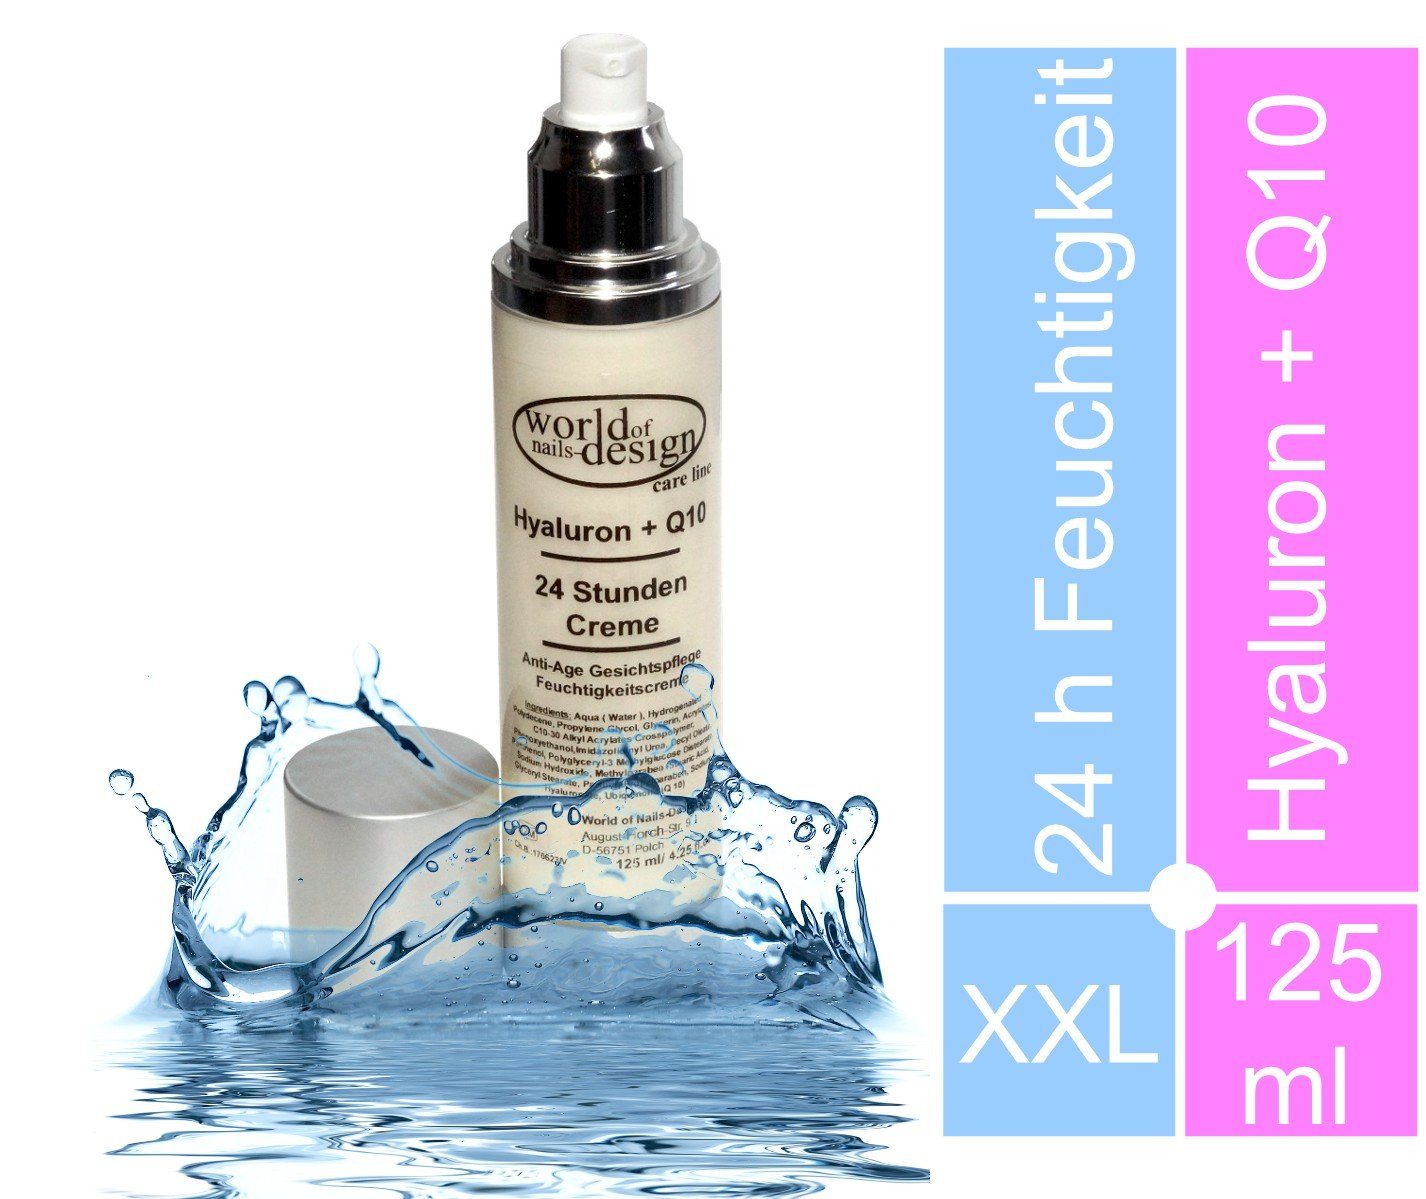 Q10, Hyaluron Nails-Design Stunden of + 24 Feuchtigkeitscreme Creme Anti-Aging World